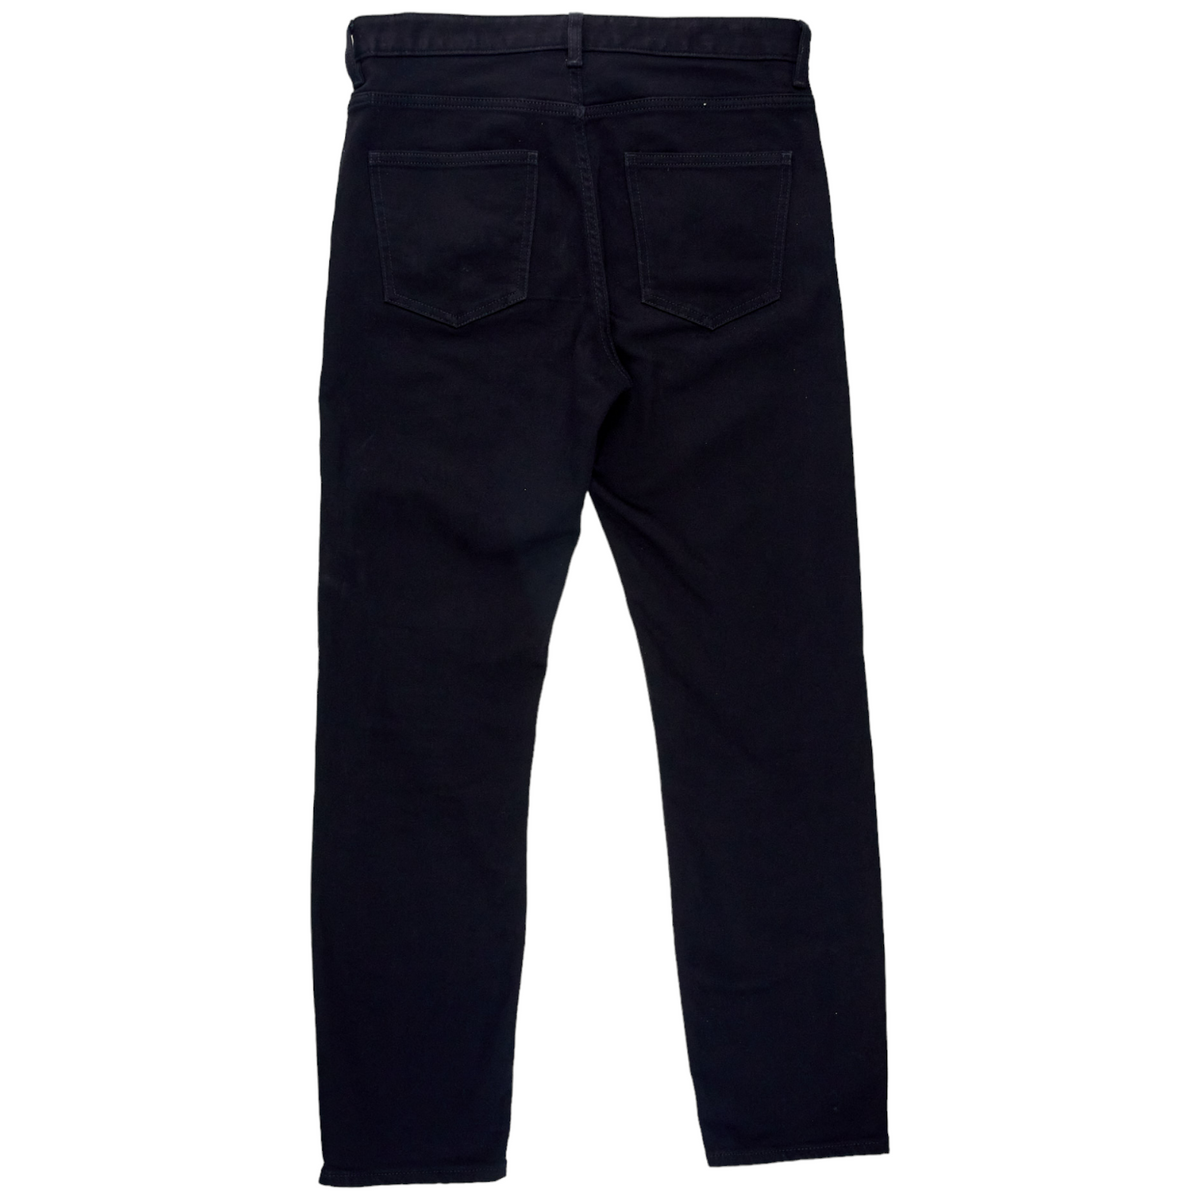 Arket Black Fitted Stretch Denim Jeans